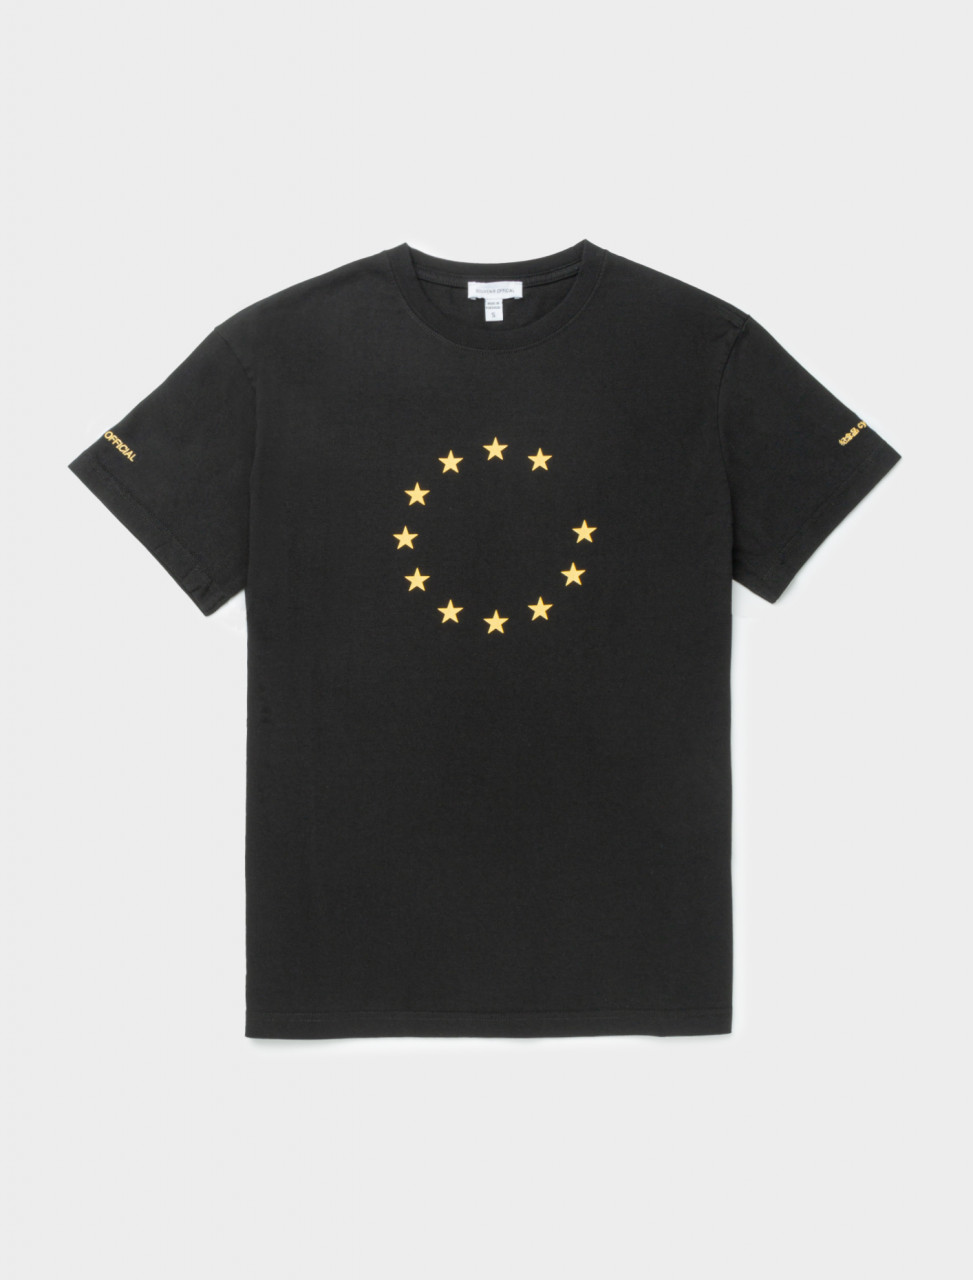 SOUVENIR EUNIFY T-Shirt in Black | Voo Store Berlin | Worldwide Shipping